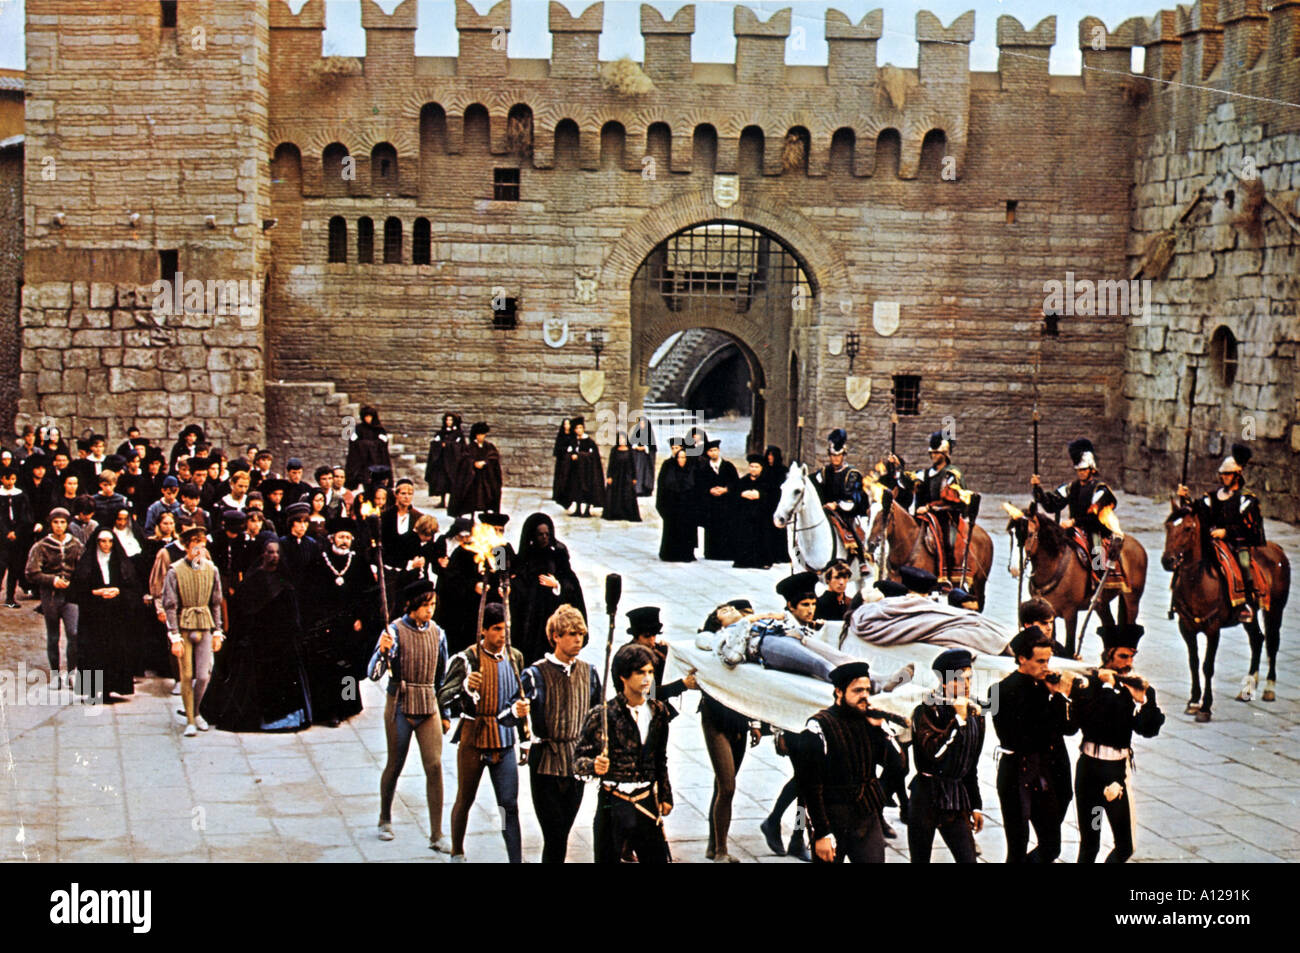 Romeo and Juliet Year 1967 Director Franco Zeffirelli Leonard Whiting Olivia Hussey Based upon Shakespeare s play Stock Photo